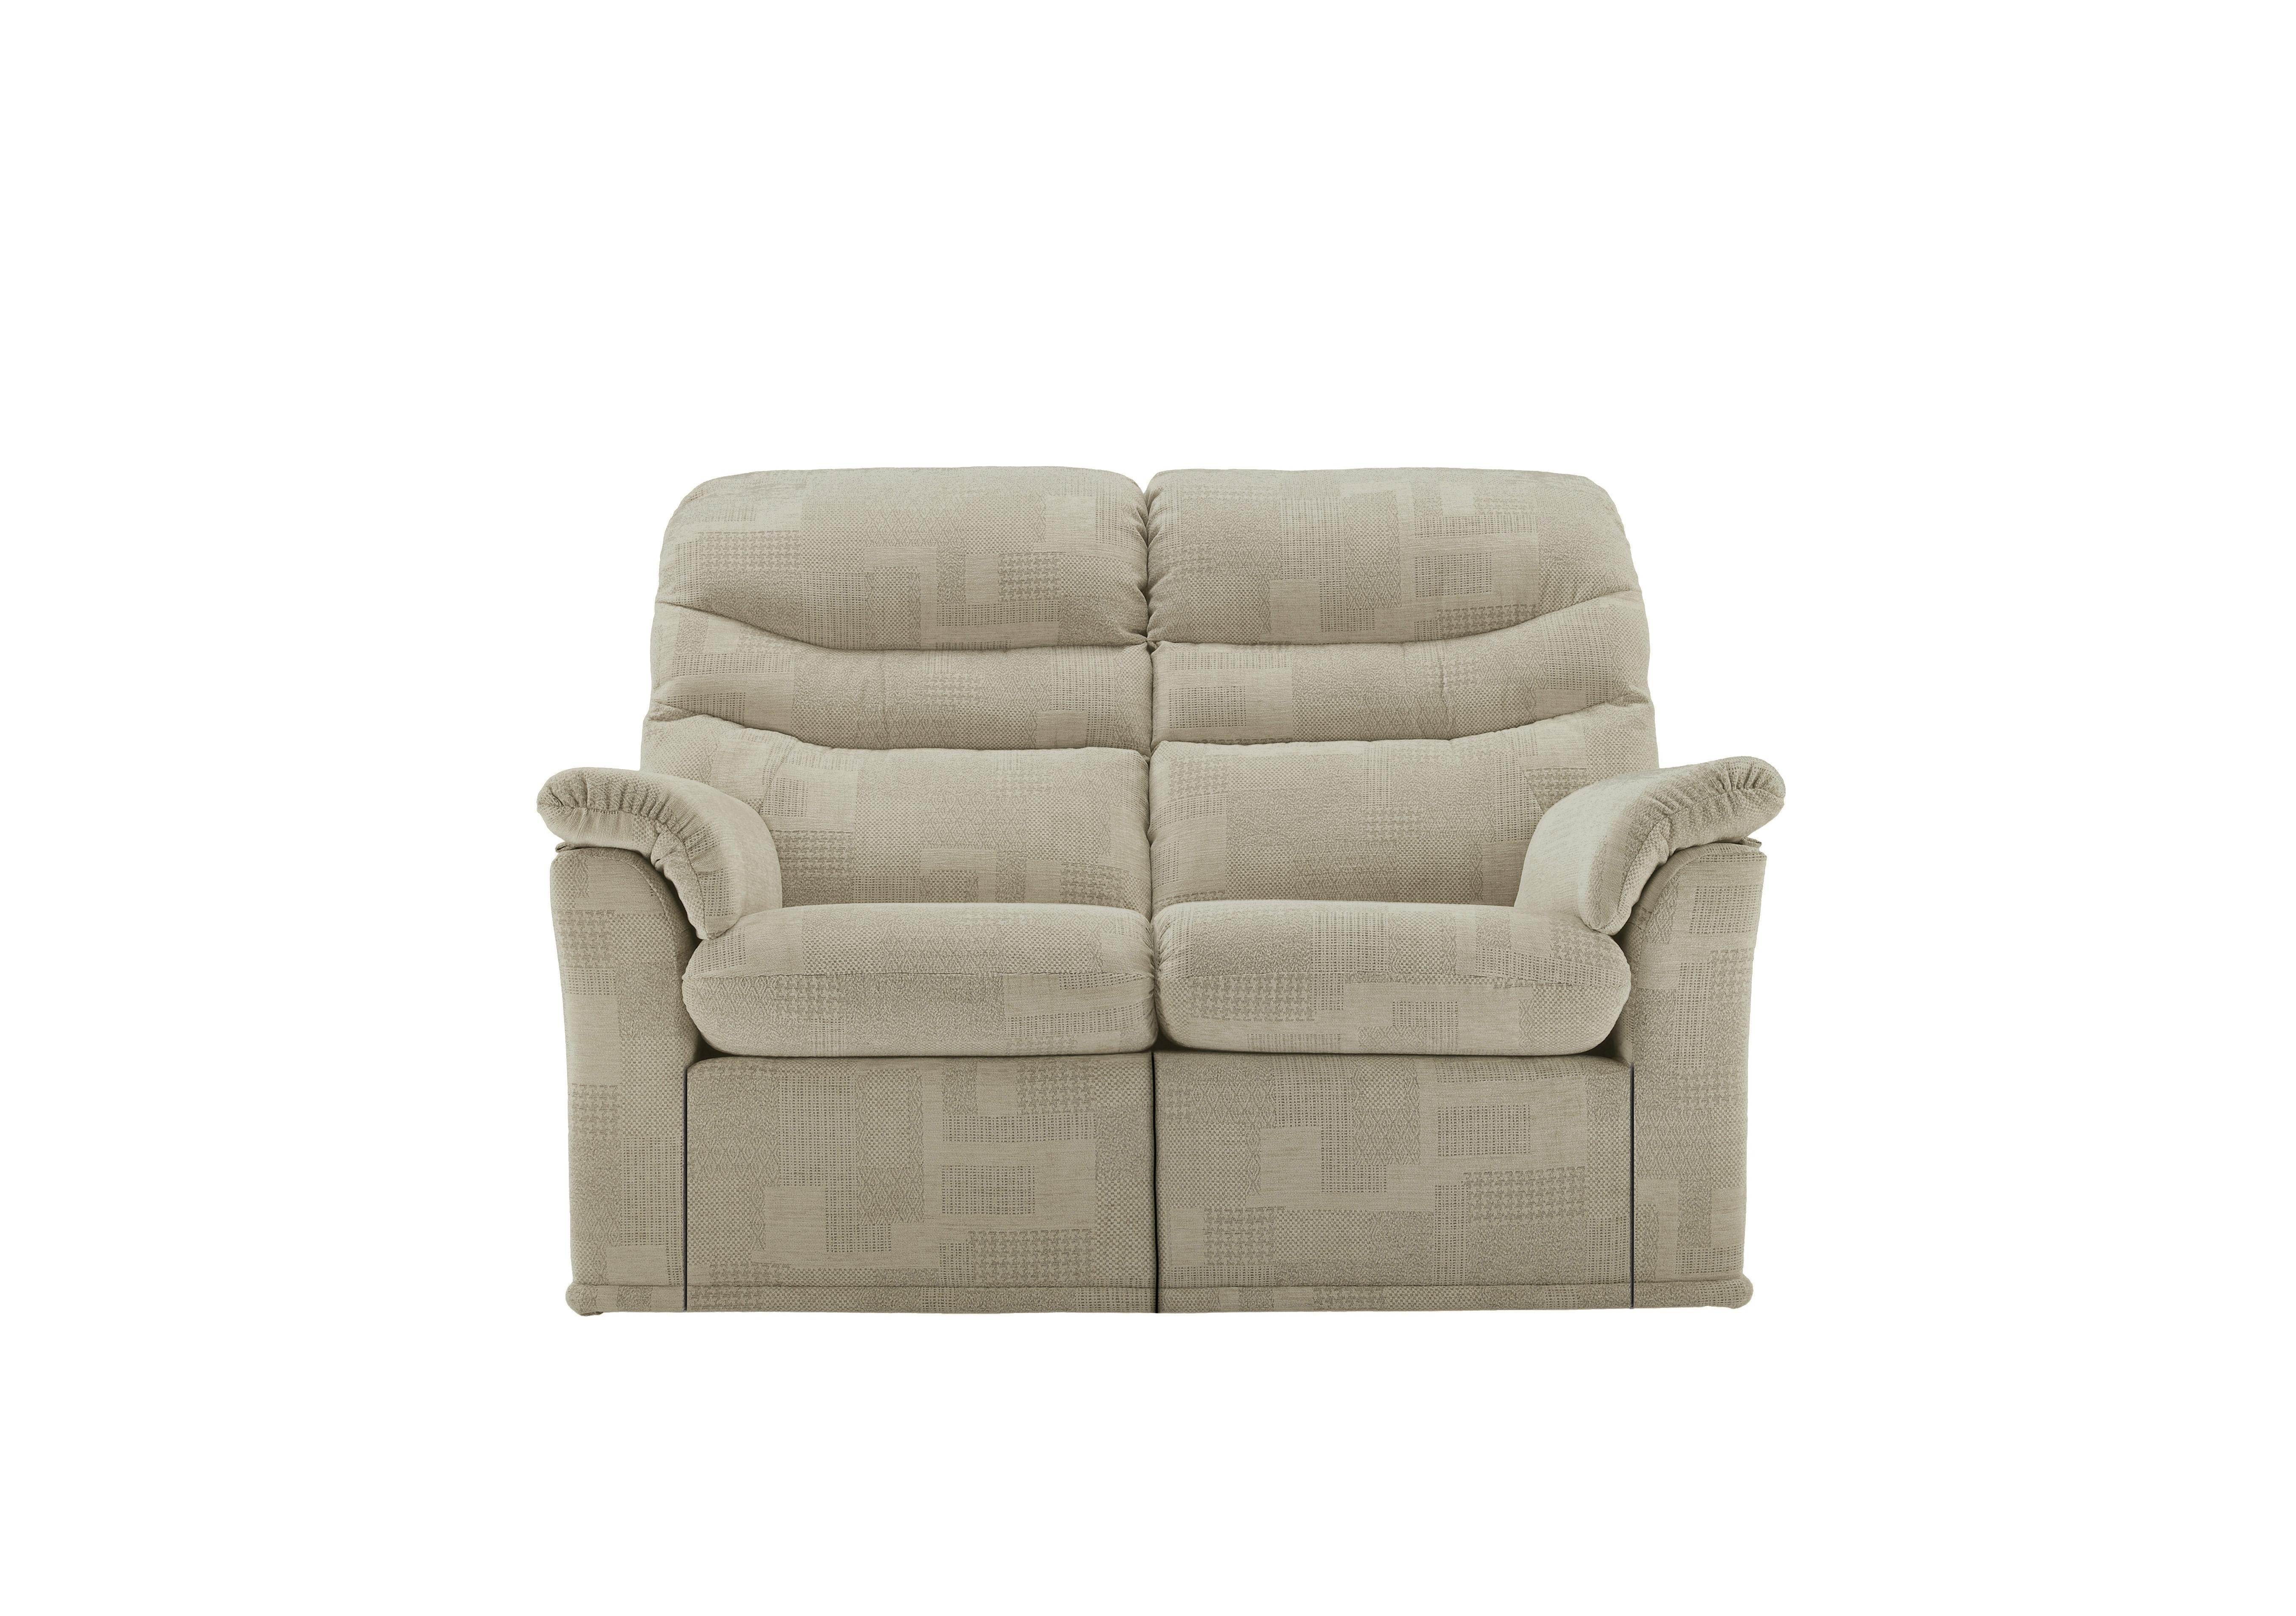 Malvern 2 Seater Fabric Sofa in B430 Lydia Multi on Furniture Village